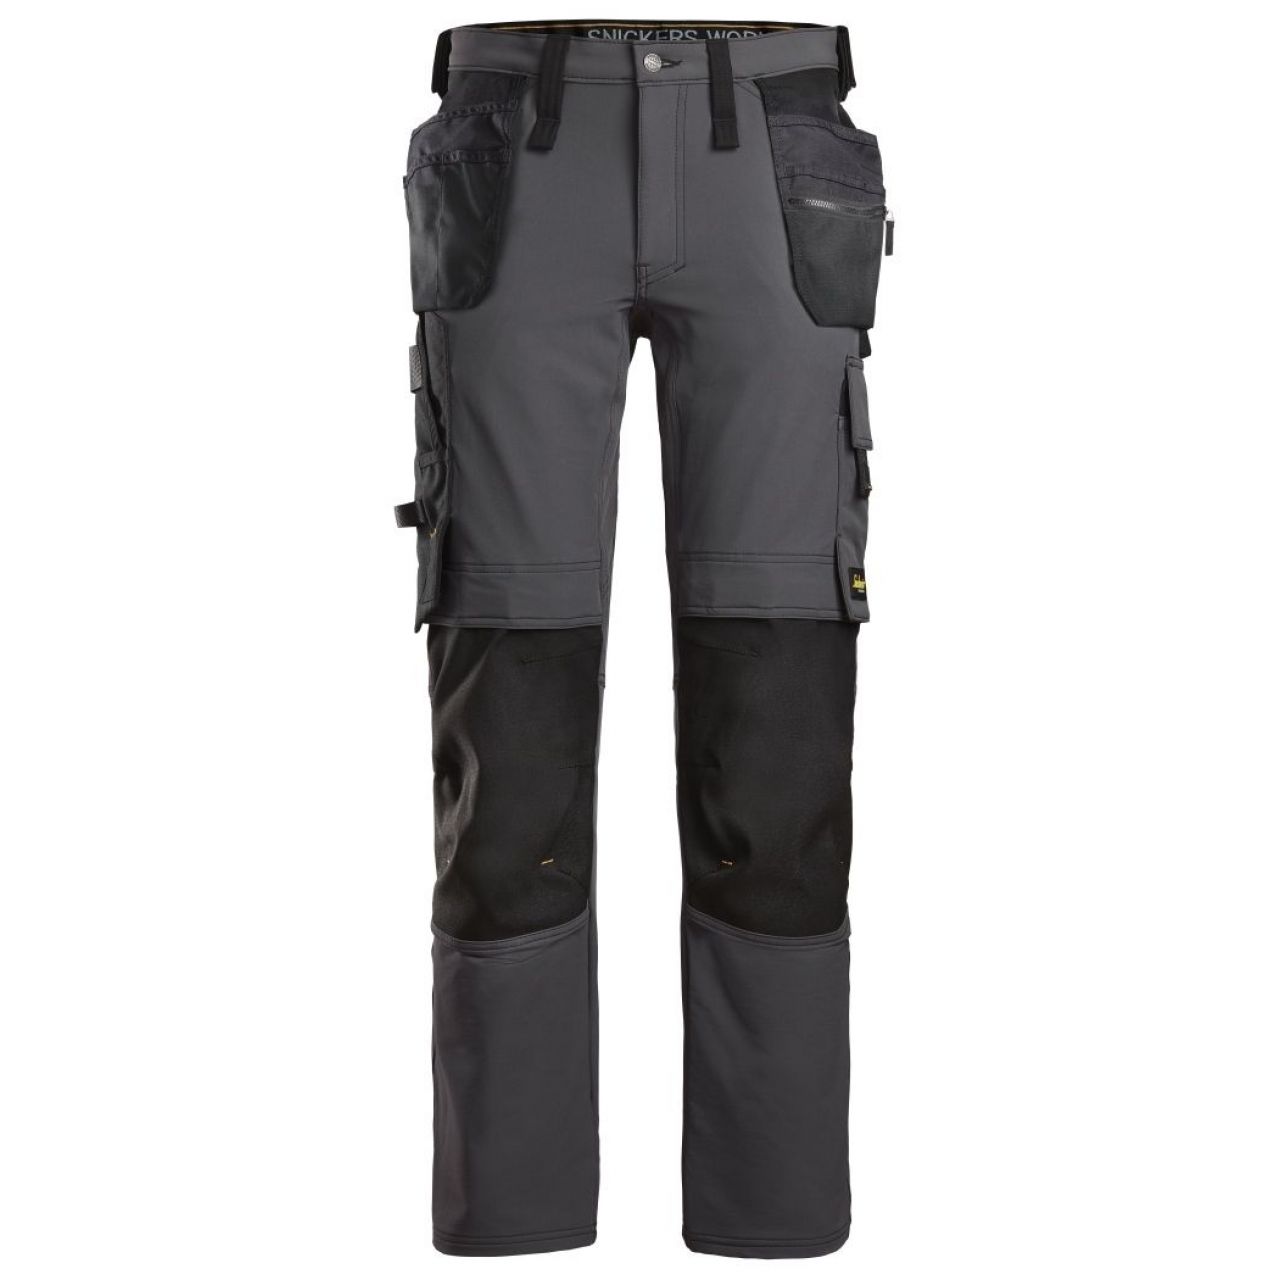 Pantalon elastico AllroundWork bolsillos flotantes gris acero-negro talla 050